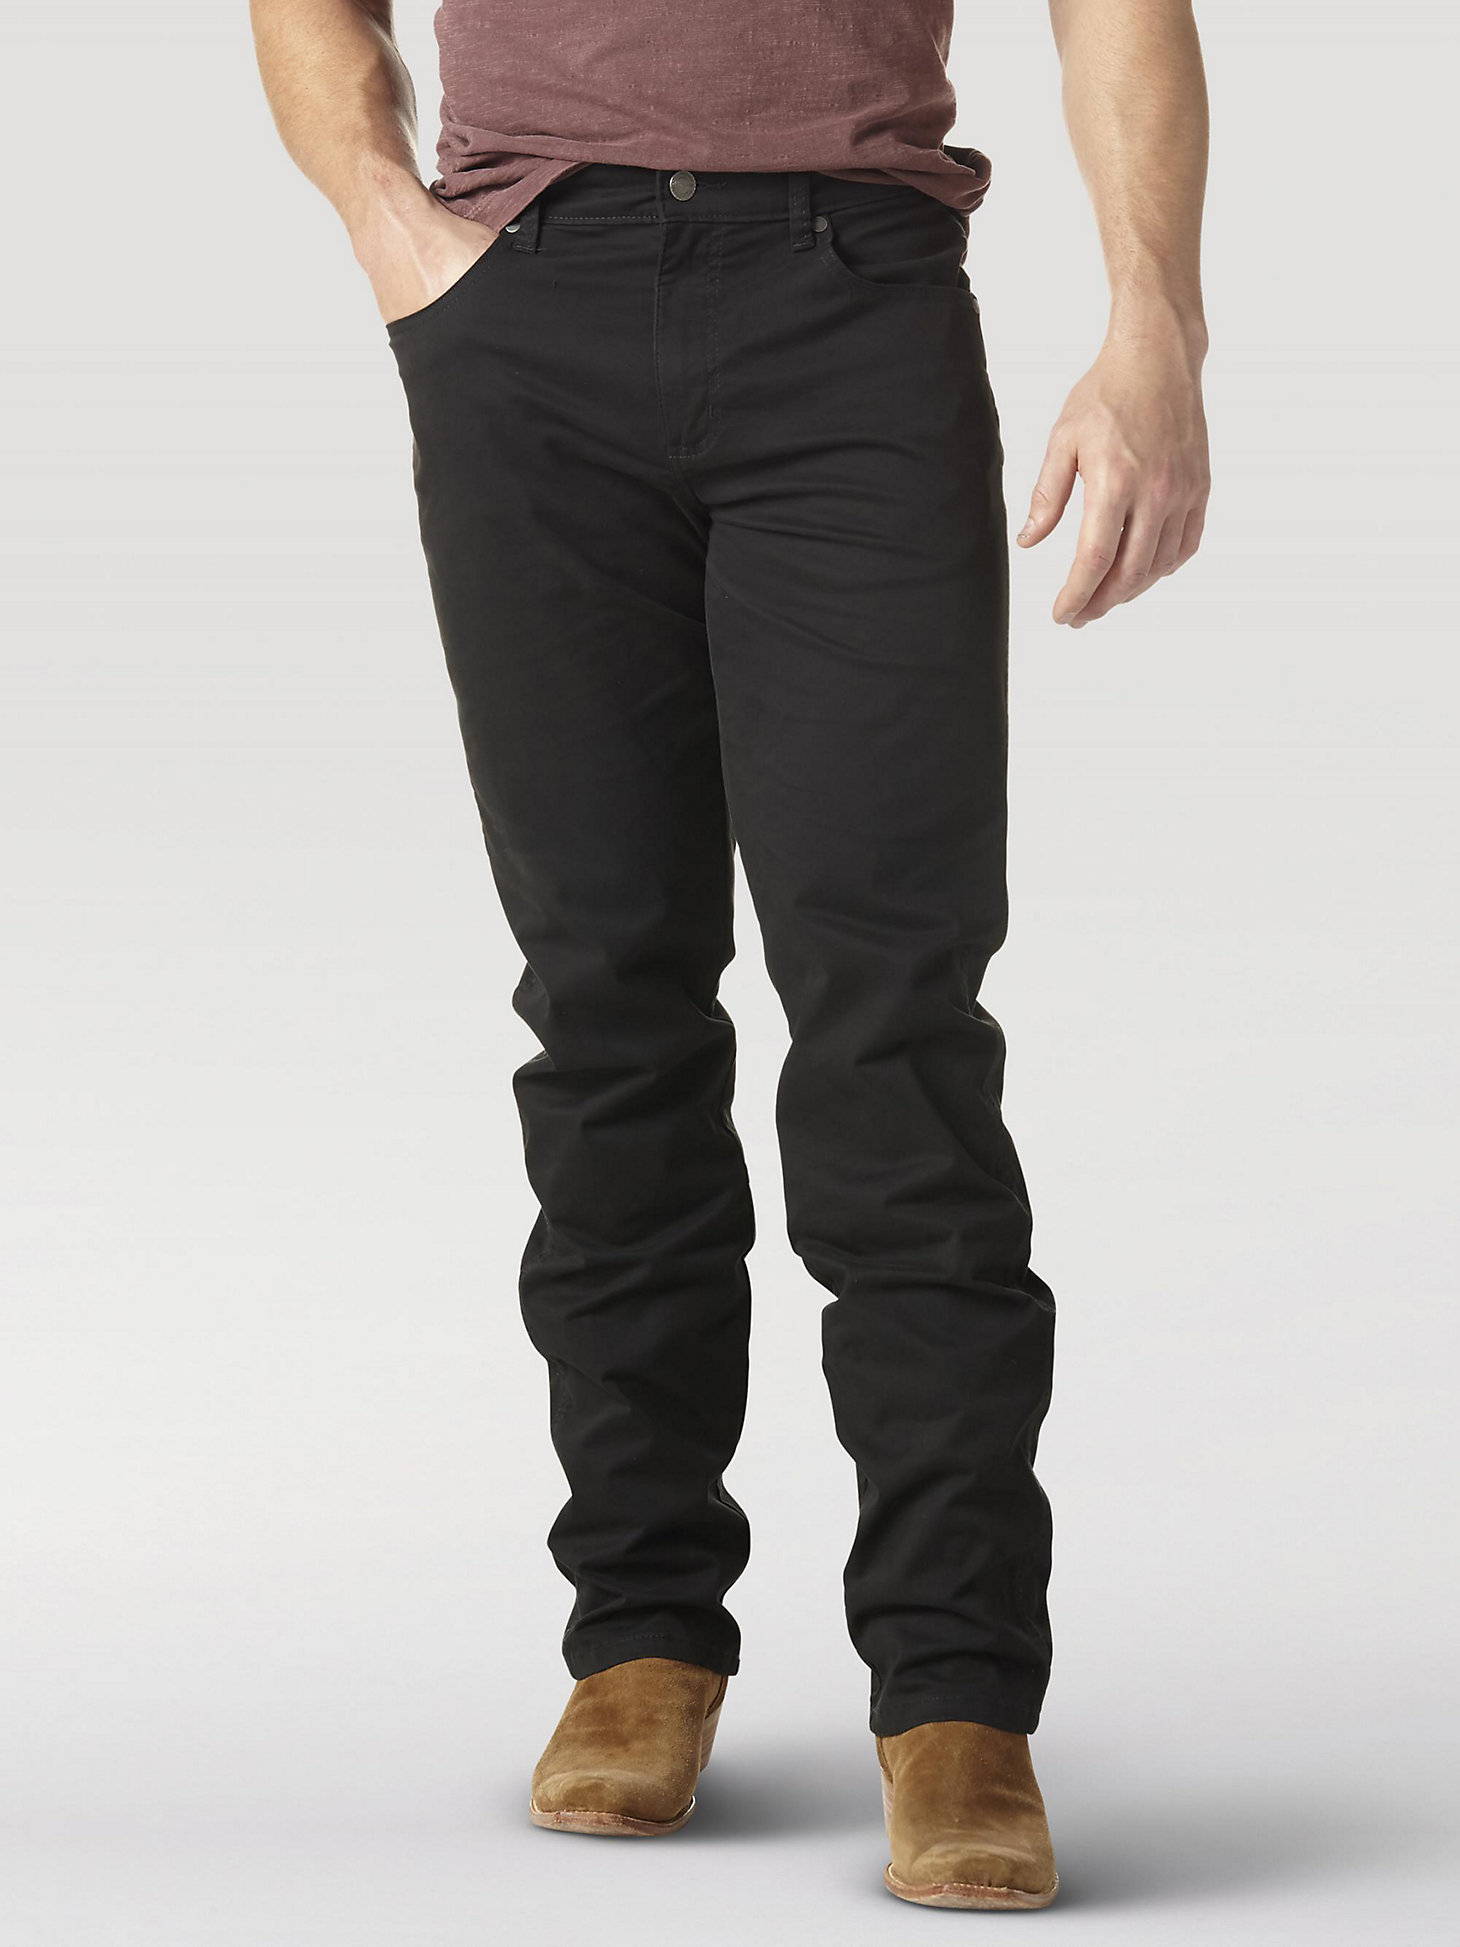 Men's Wrangler Retro® Fit Straight Pant